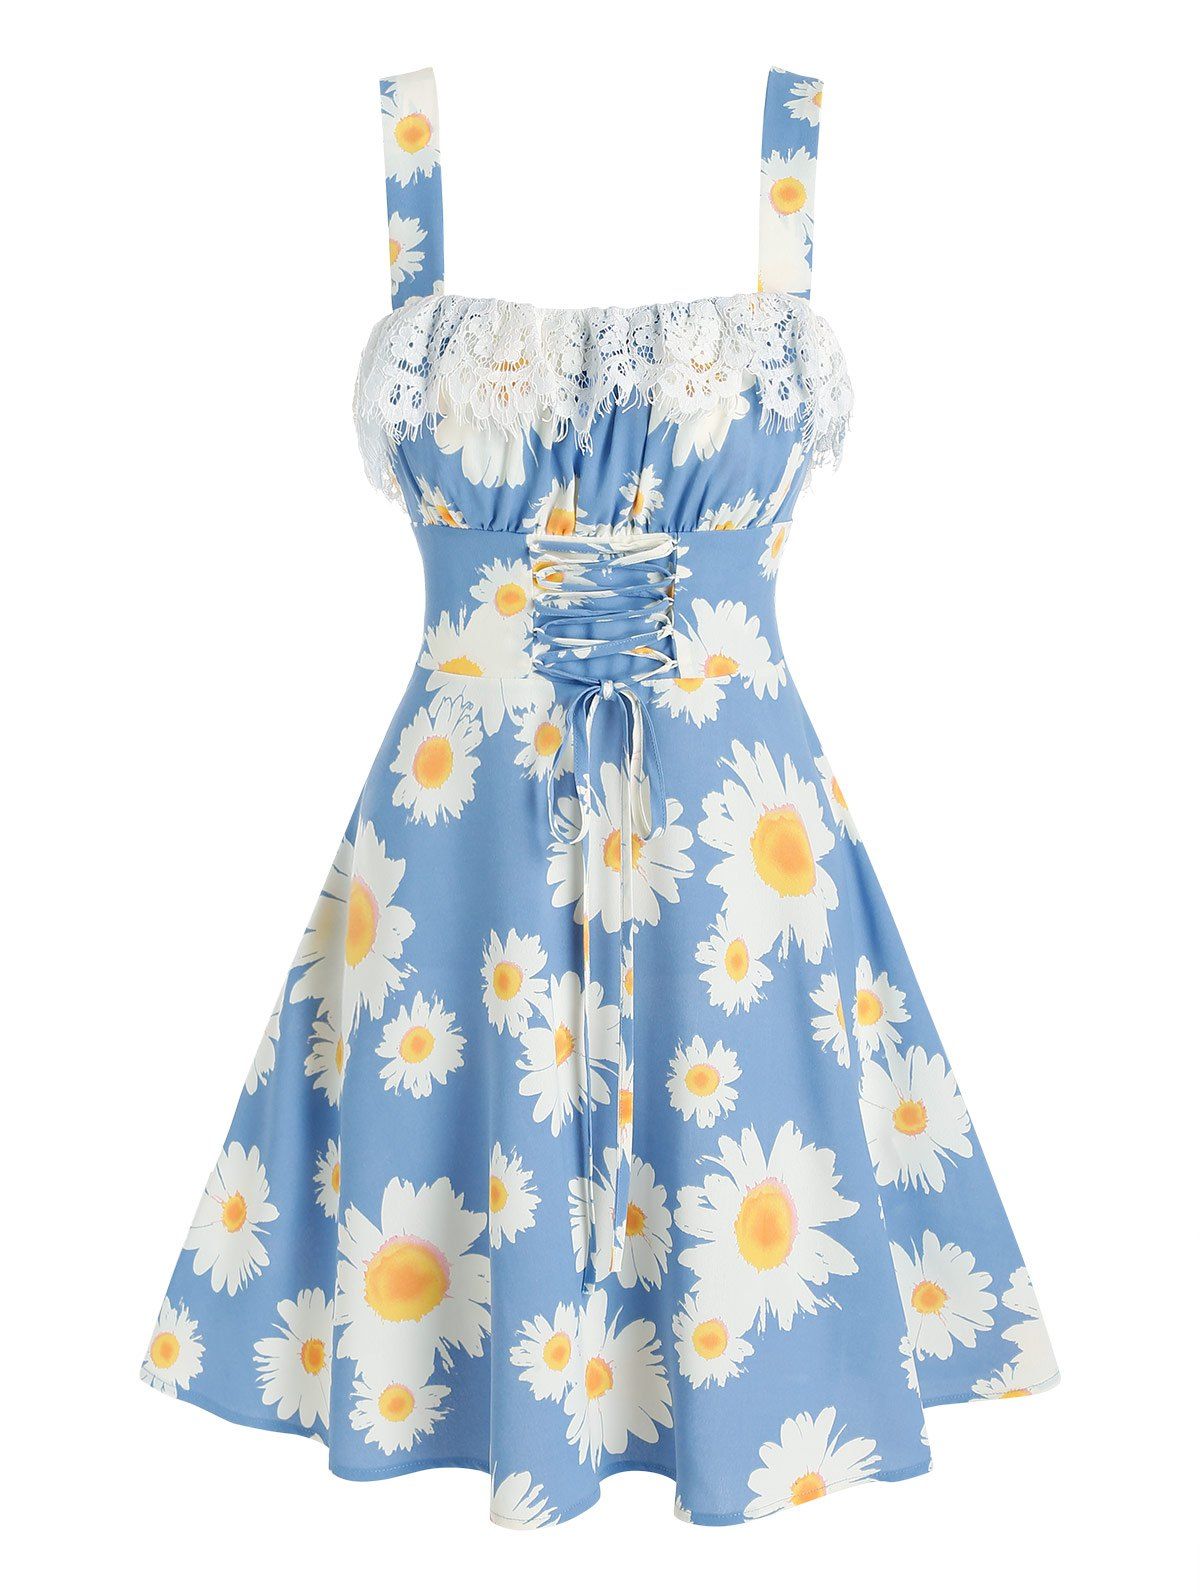 Vacation A Line Mini Sundress Sunflower Print Lace Insert Lace Up Ruched Sleeveless Summer Dress - BLUE 2XL